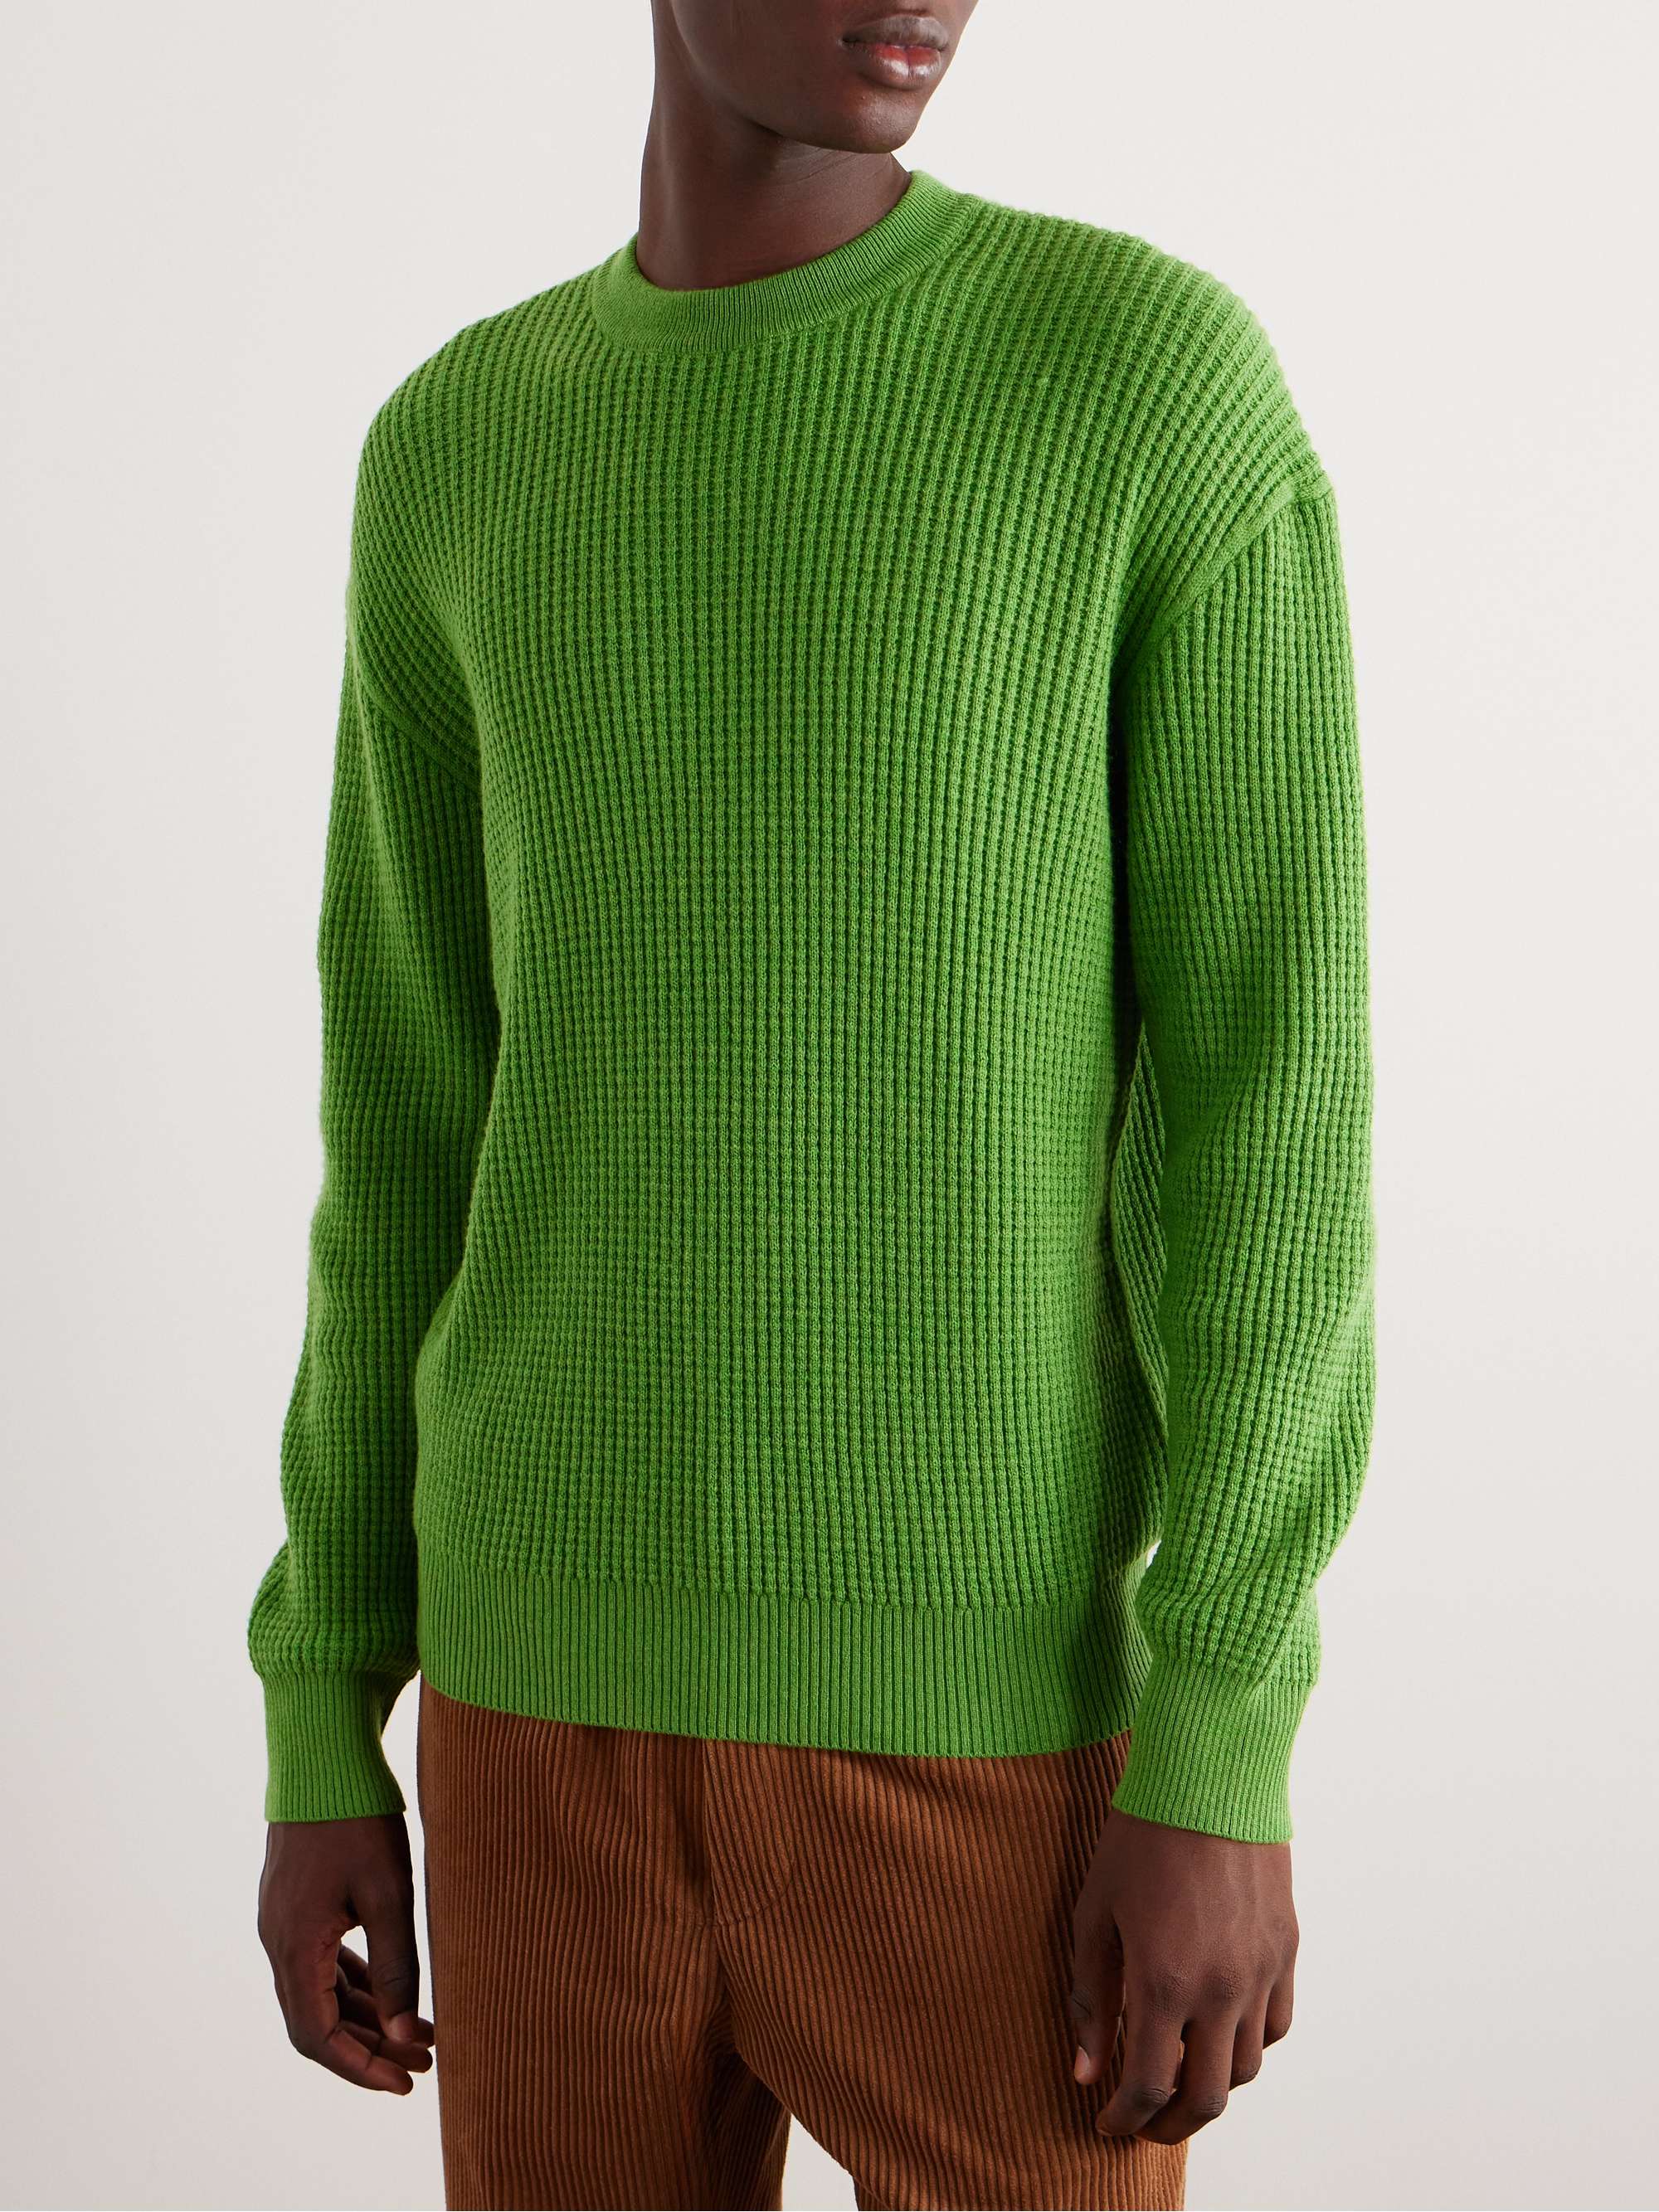 ZEGNA X THE ELDER STATESMAN Waffle-Knit Oasi Cashmere Sweater for Men ...